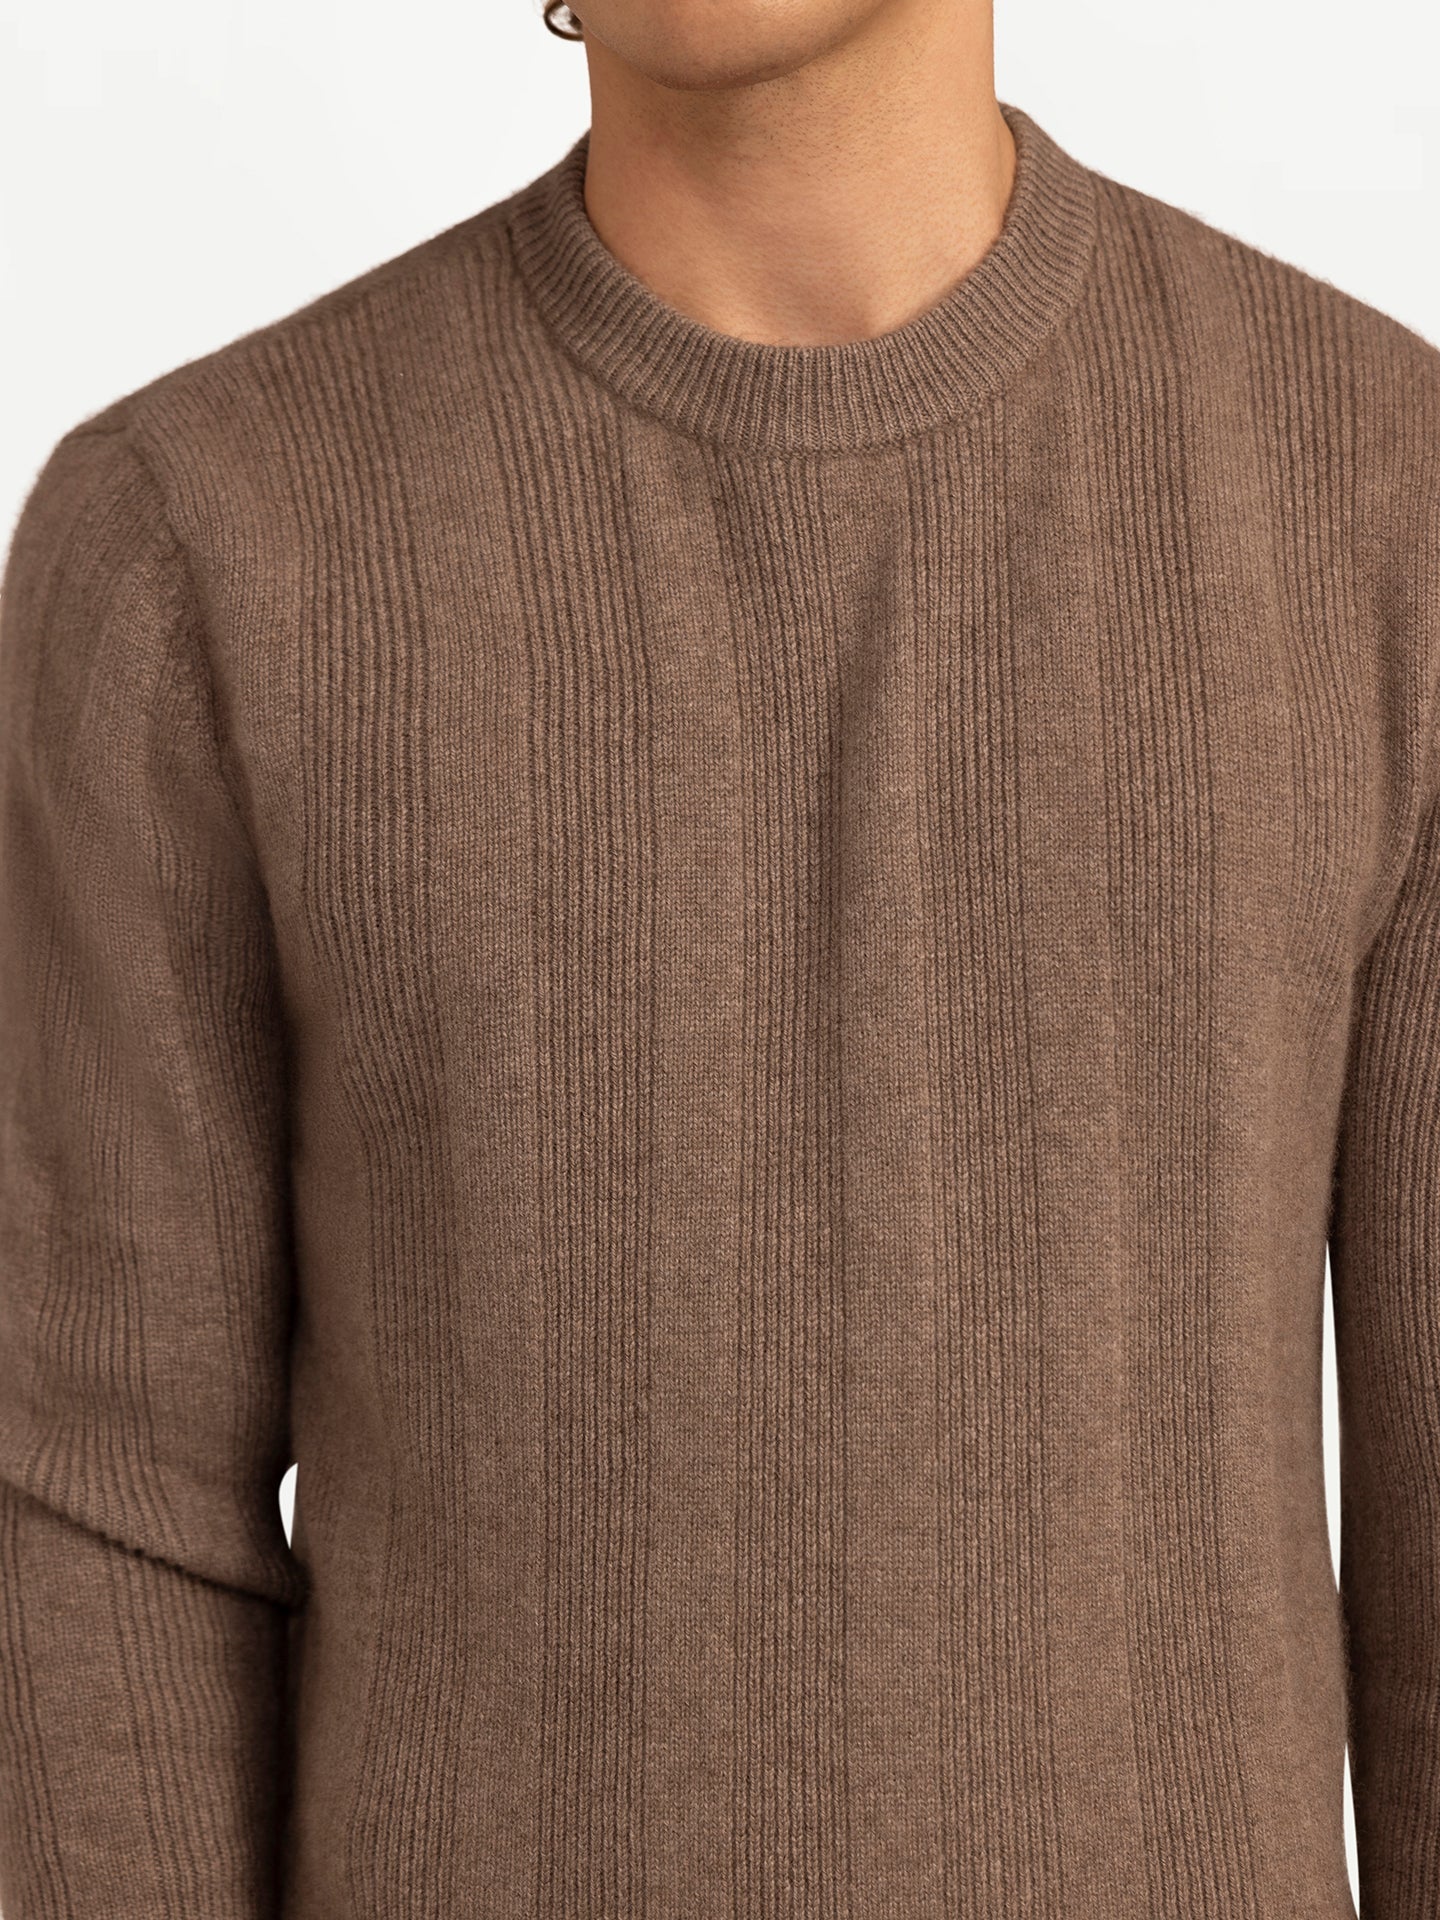 Men's Cashmere Vertical-Striped Sweater Taupe - Gobi Cashmere